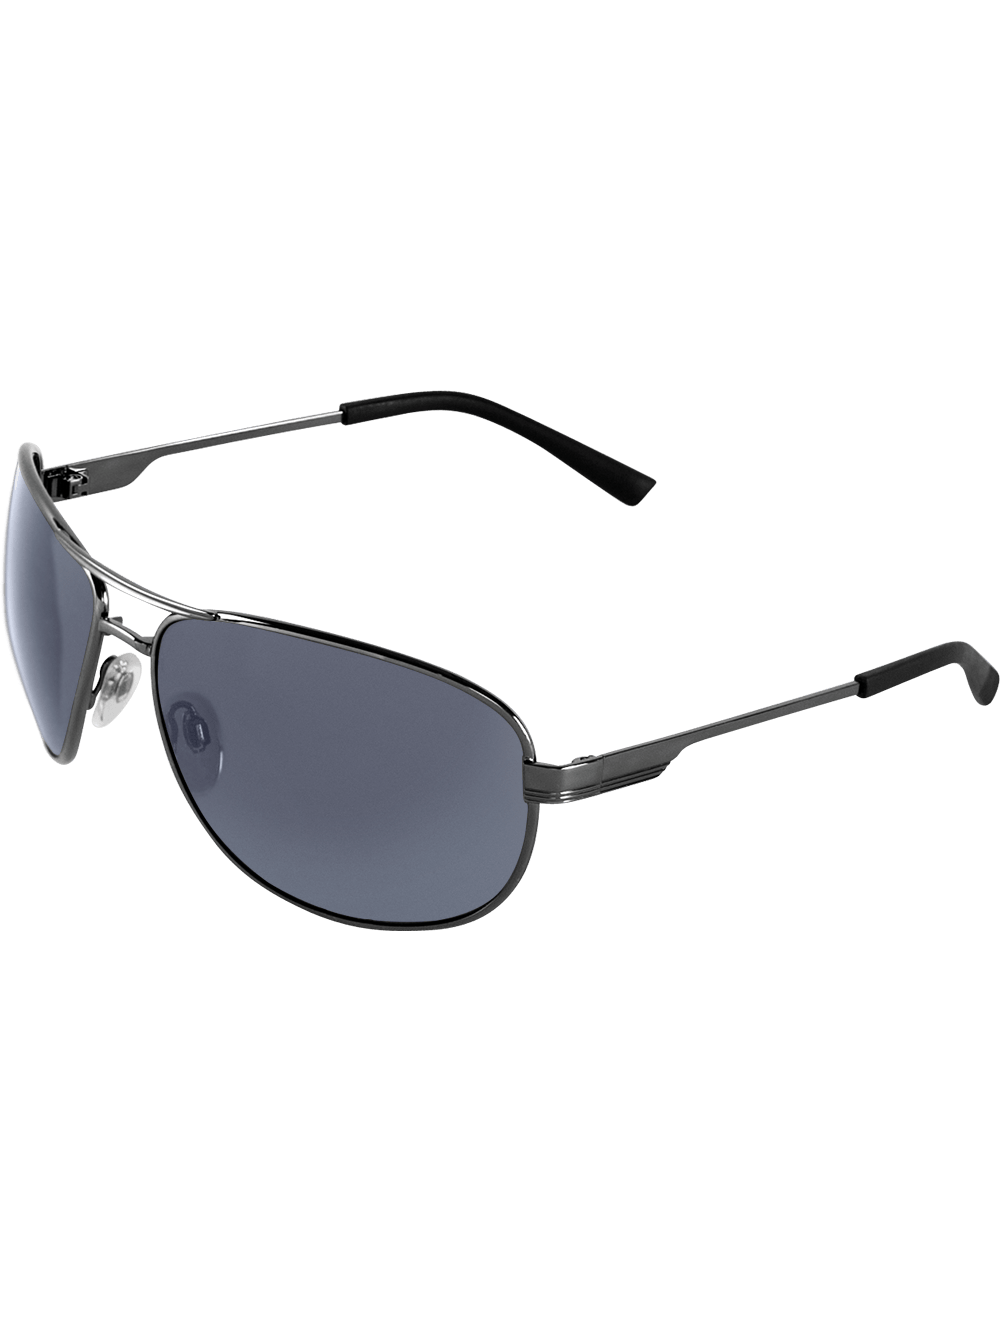 Acero® Smoke Lens, Gunmetal Frame Safety Glasses - BH24213